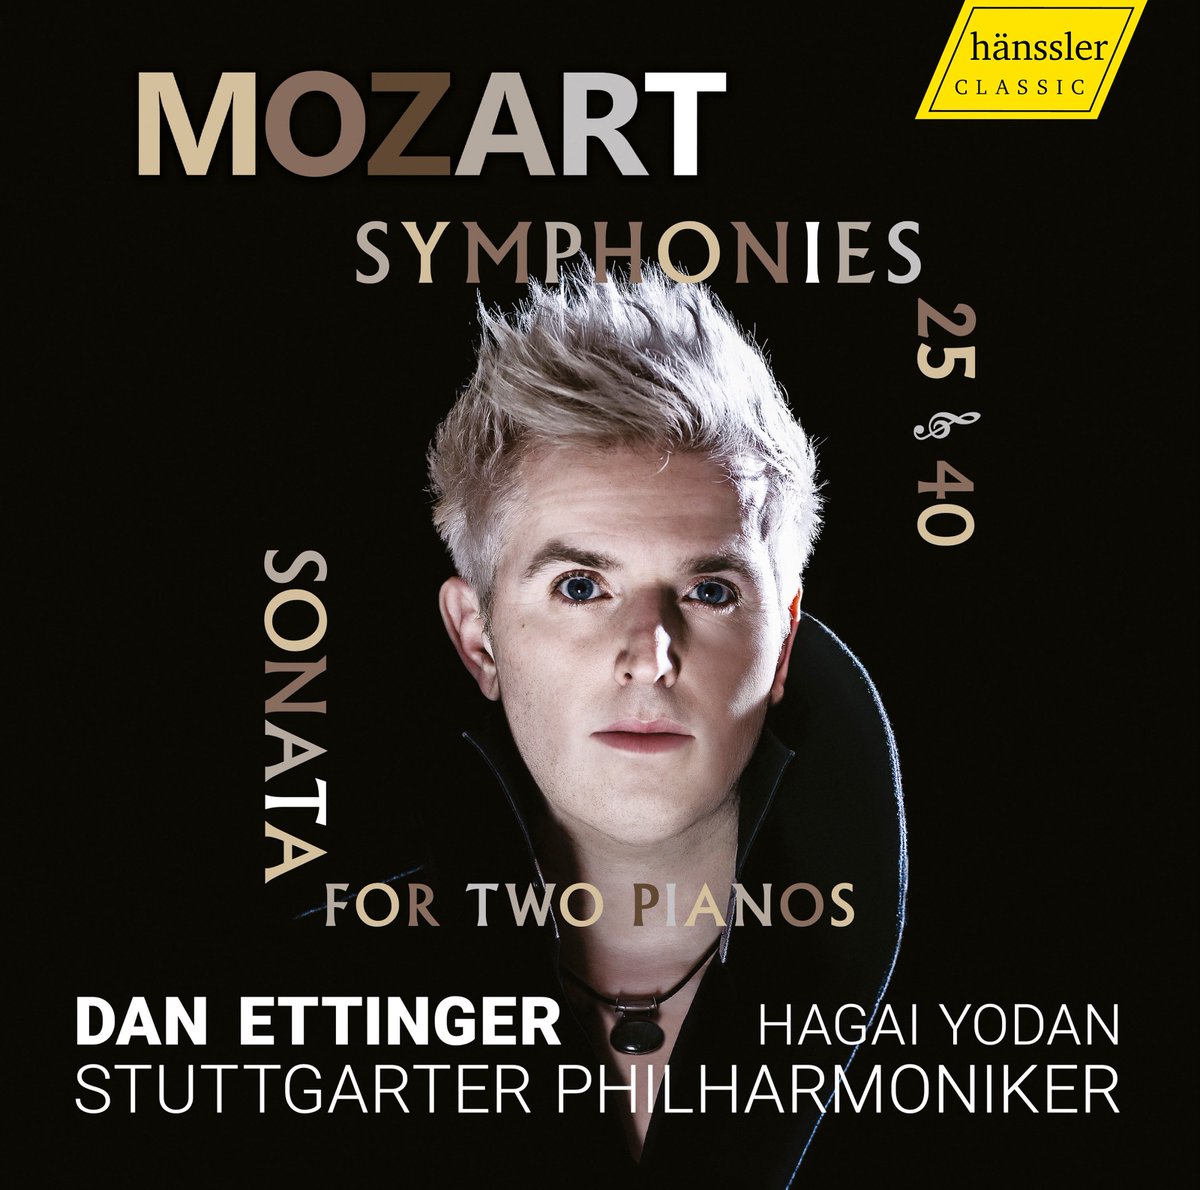 New September 2018: #StuttgarterPhilharmoniker & #DanEttinger & @hagaiyodan in an all #Mozart new CD!
Symphony No. 25 K183
2 Pianos Sonata K448
Symphony No. 40 K550! #ff
@ChandosRecords chandos.net/products/catal…